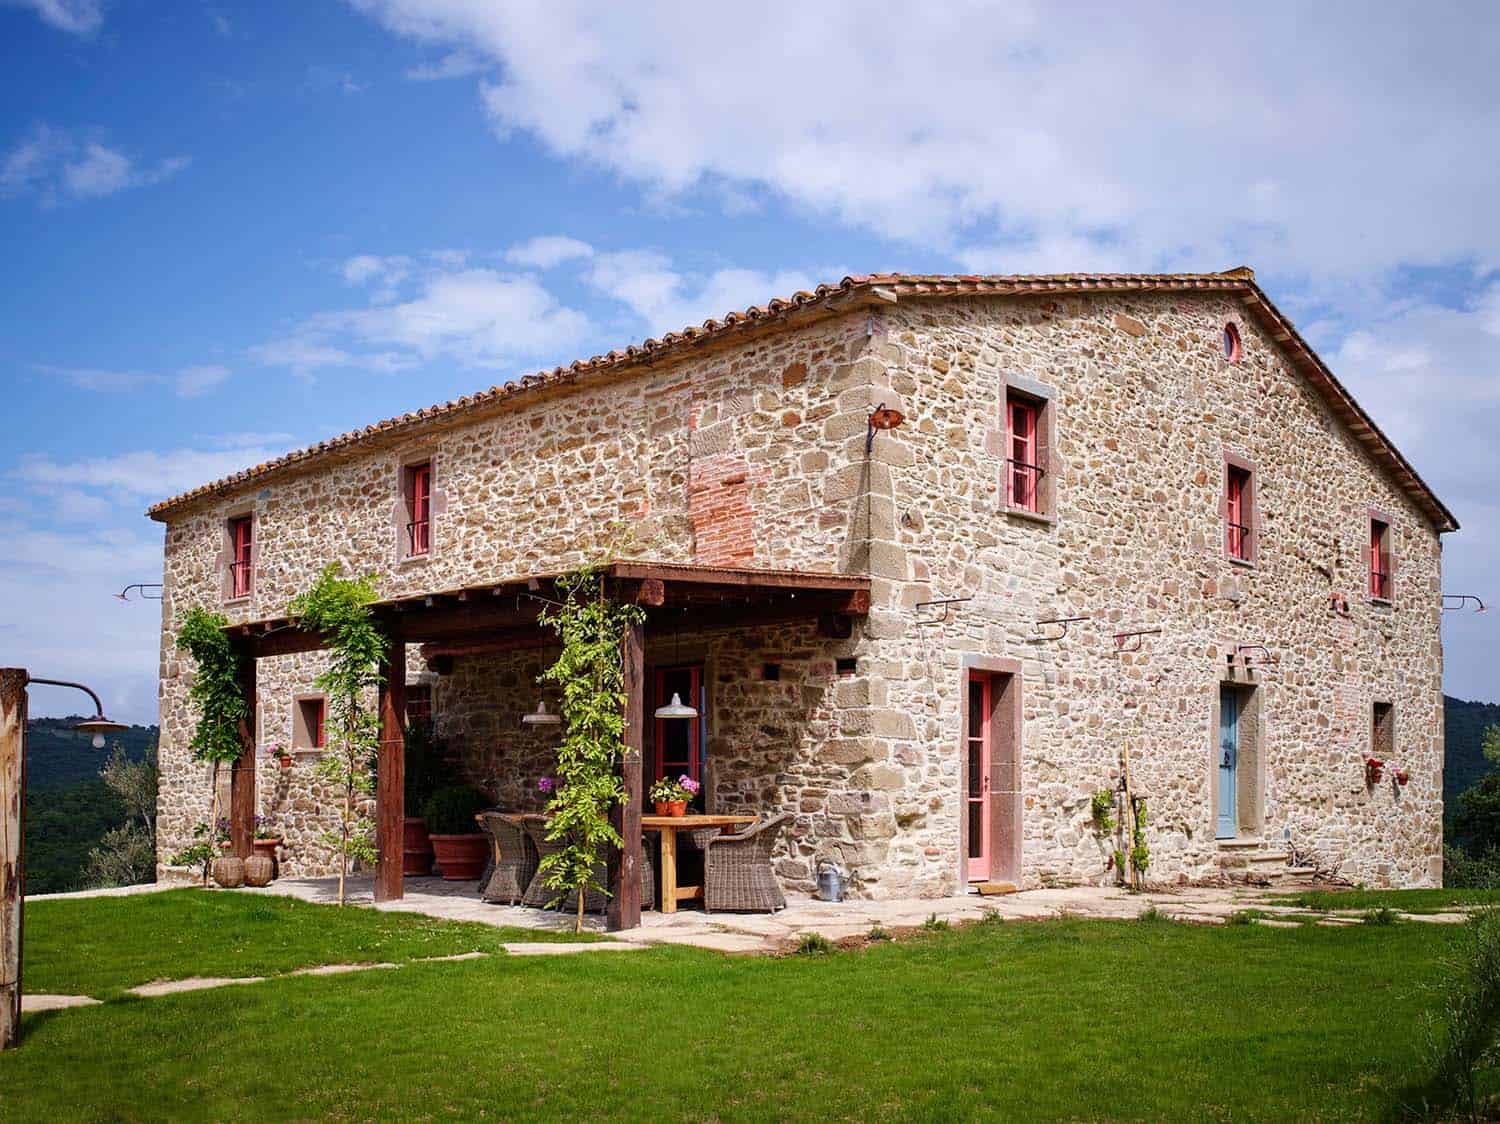 16th Century farmhouse restored into charming holiday villa in Italy